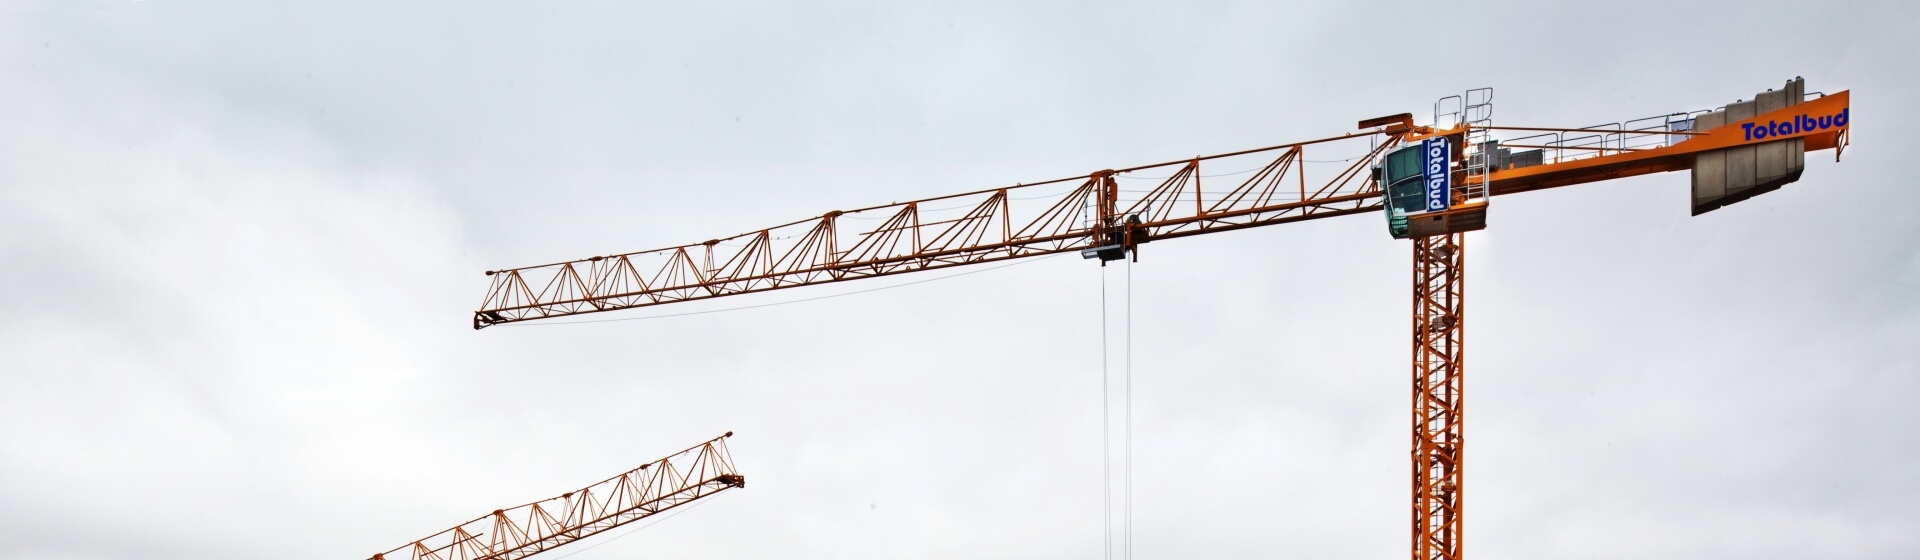 Three-Potain-cranes-keep-Warsaw-apartment-block-project-on-schedule-01.jpg